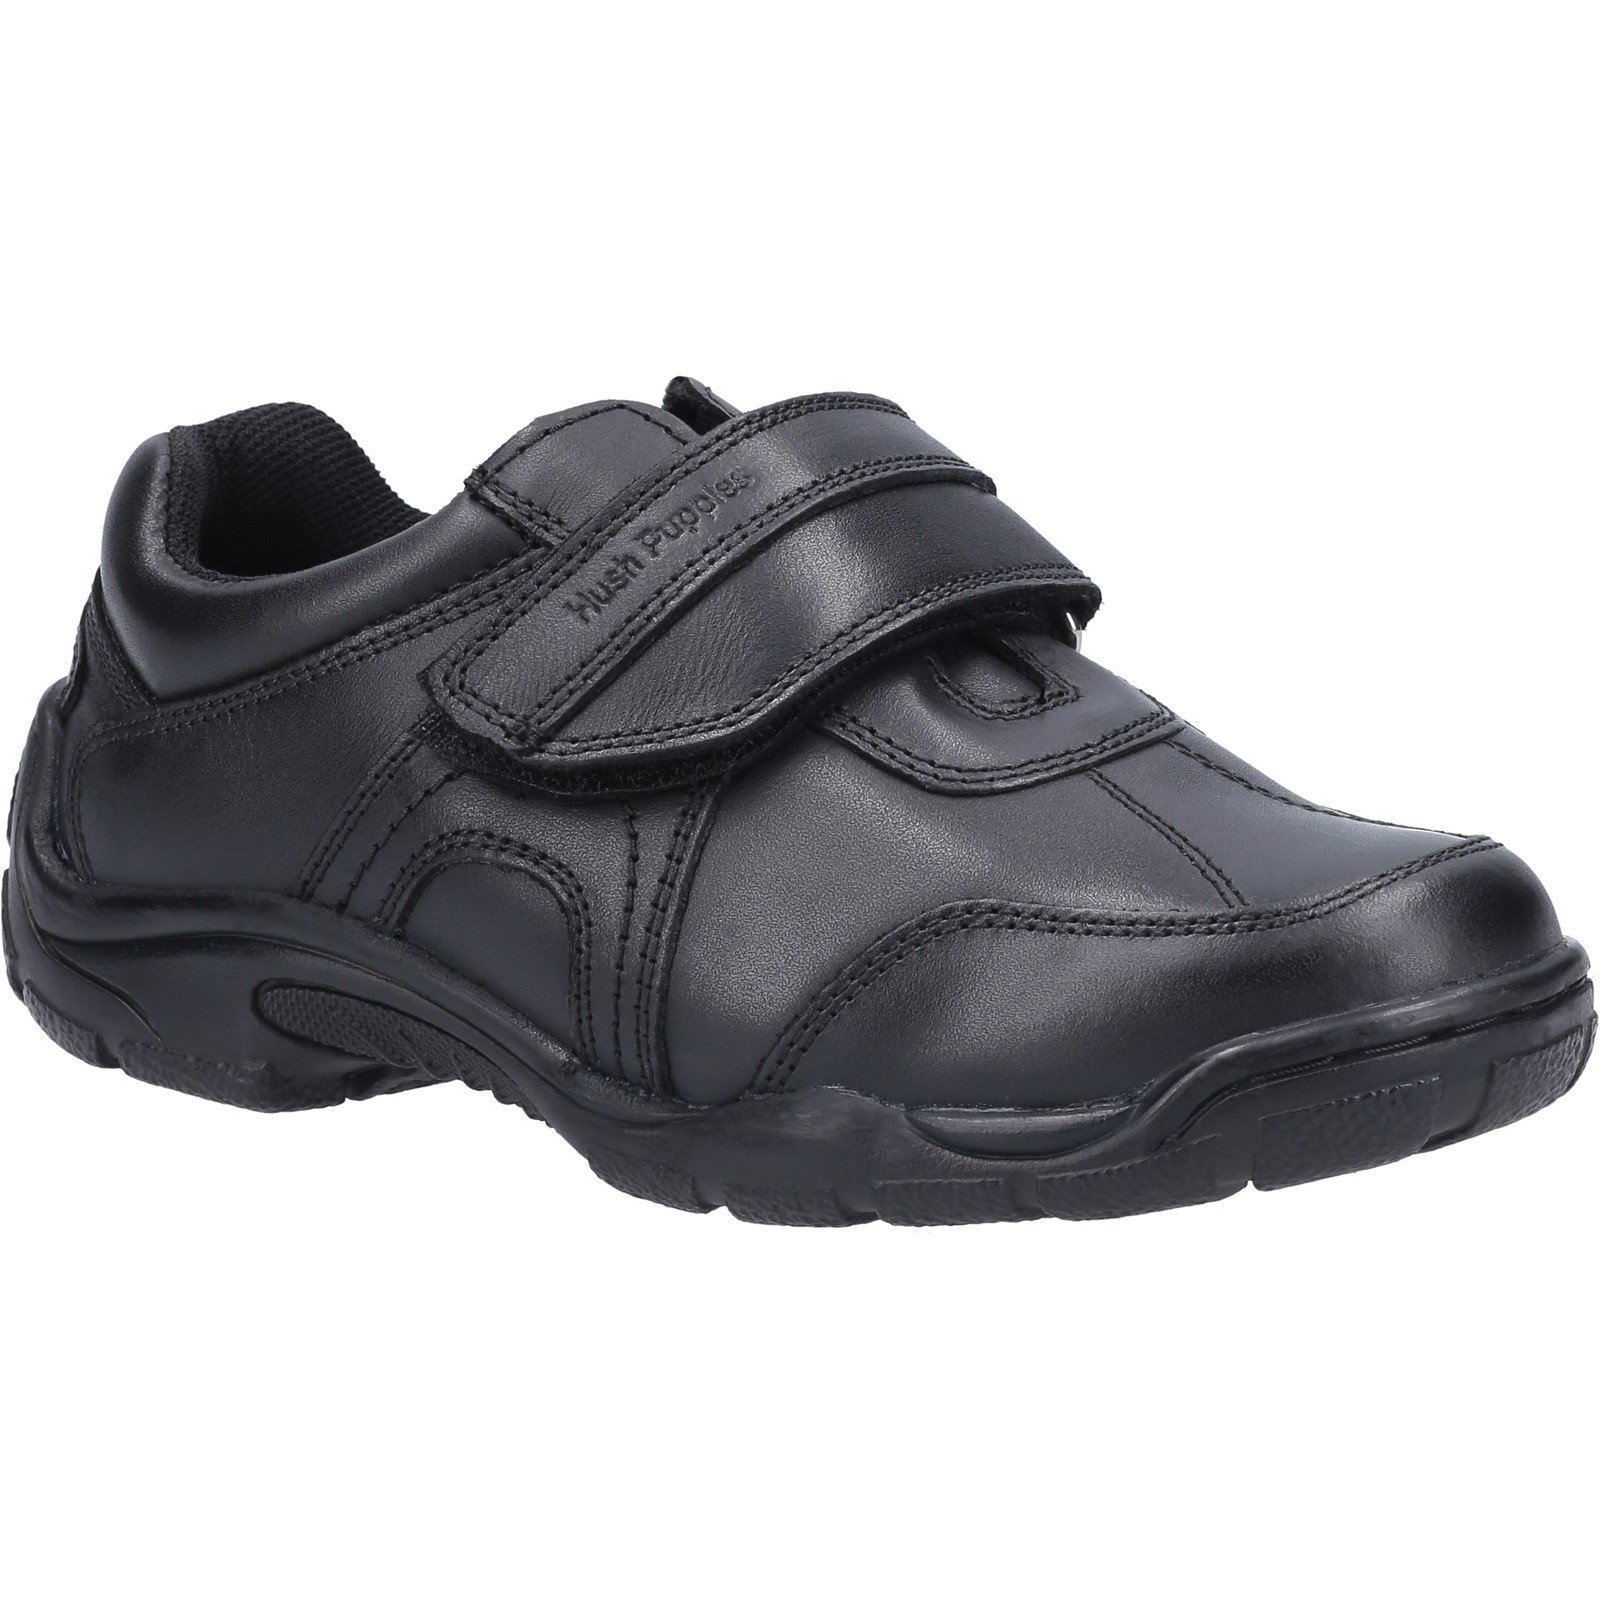 Hush Puppies Kid's Arlo Junior School Shoe Black 30853 - Black 11